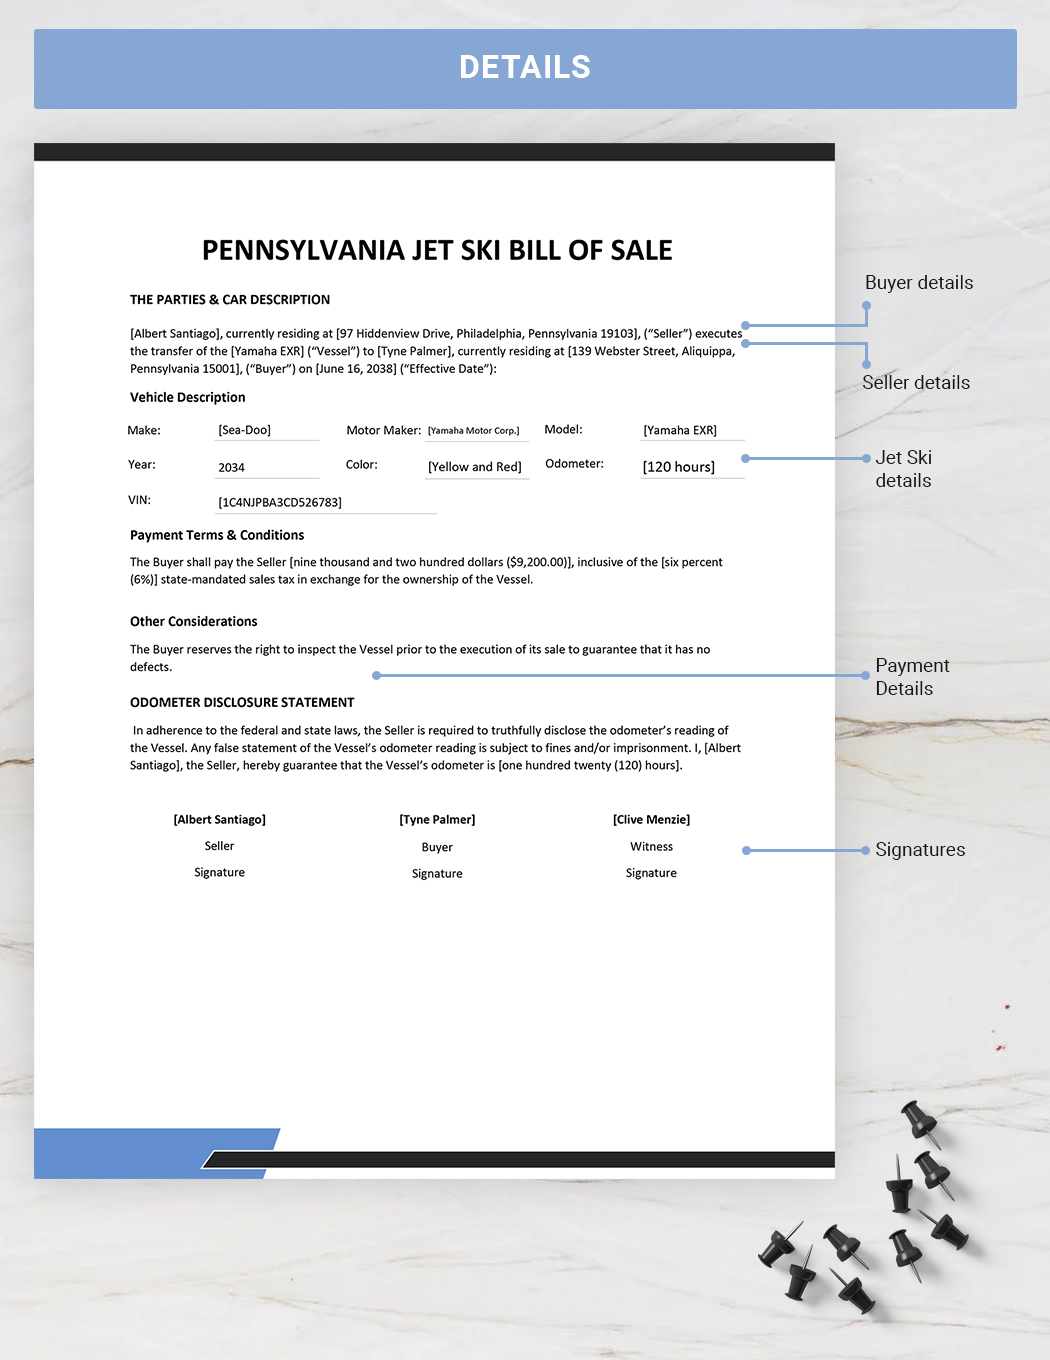 Pennsylvania Jet Ski Bill of Sale Template